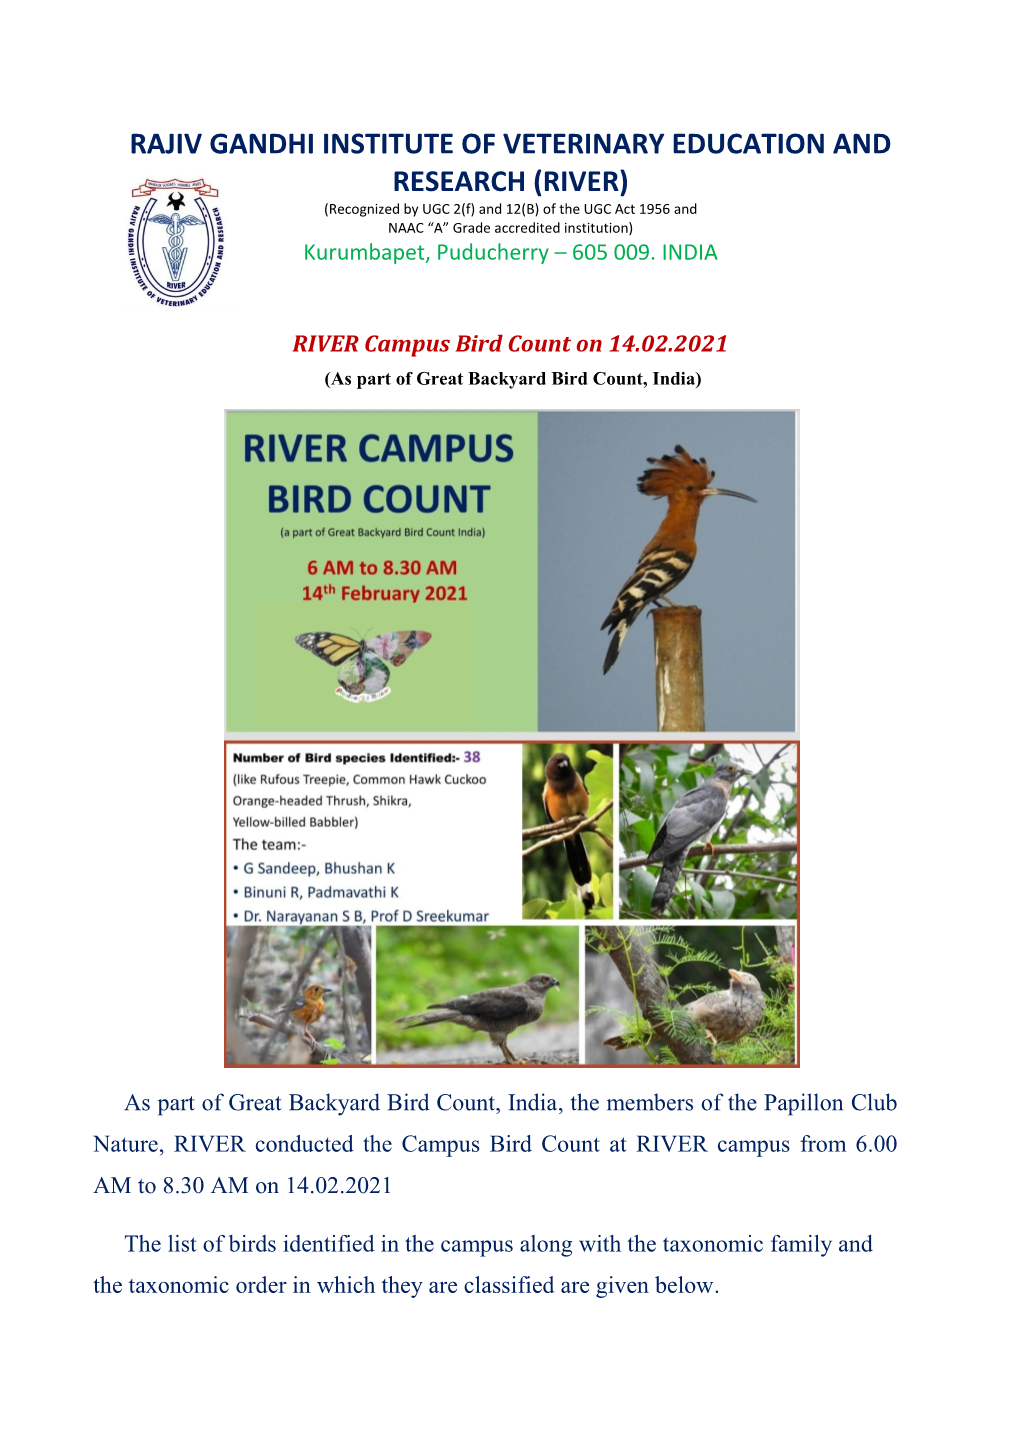 RIVER Campus Bird Count Held on 14-02-2021